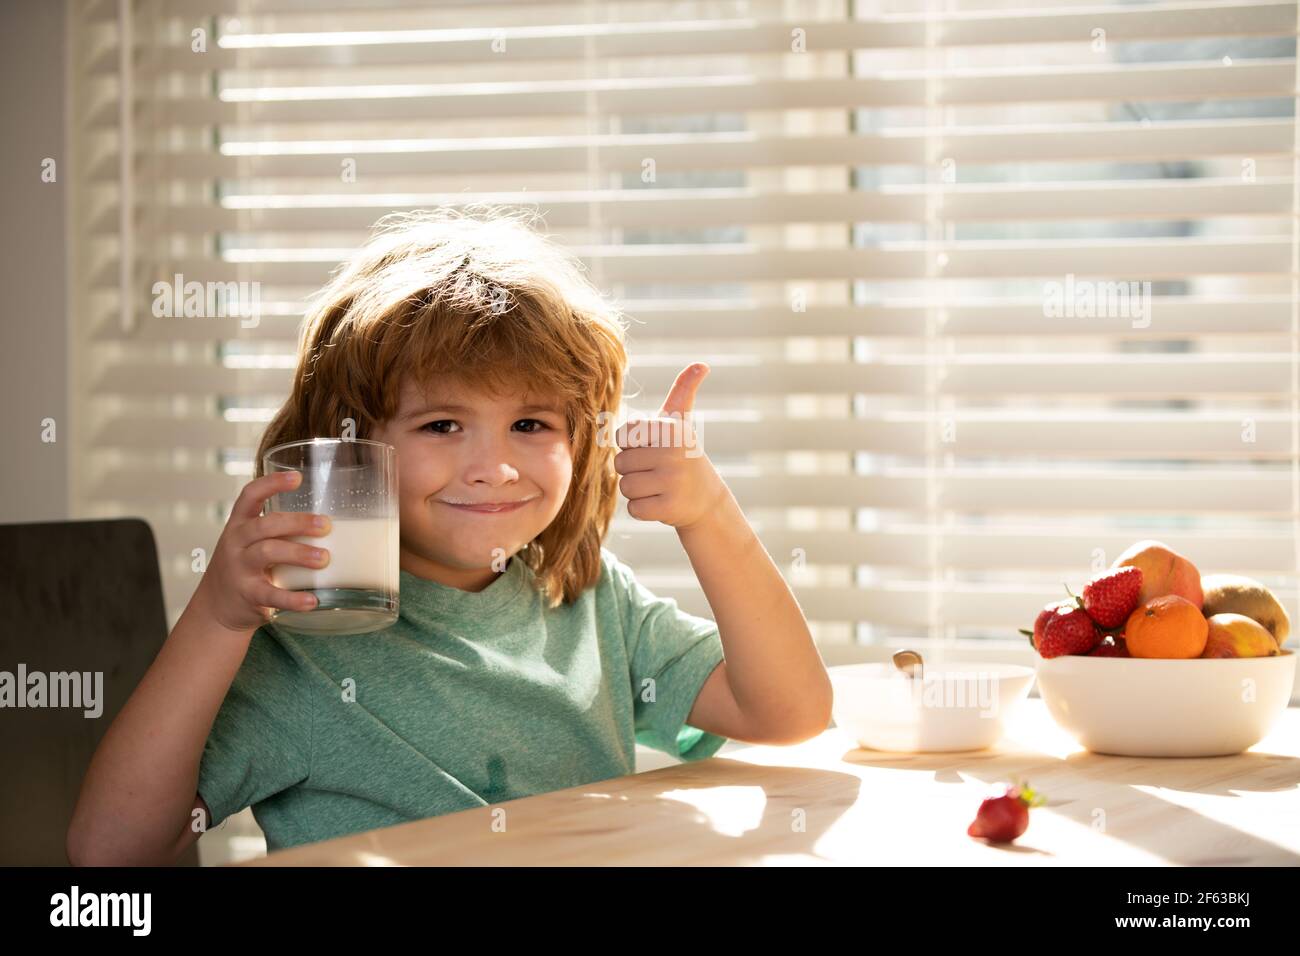 Kid eating breakfast. Child eating healthy food. Stock Photo